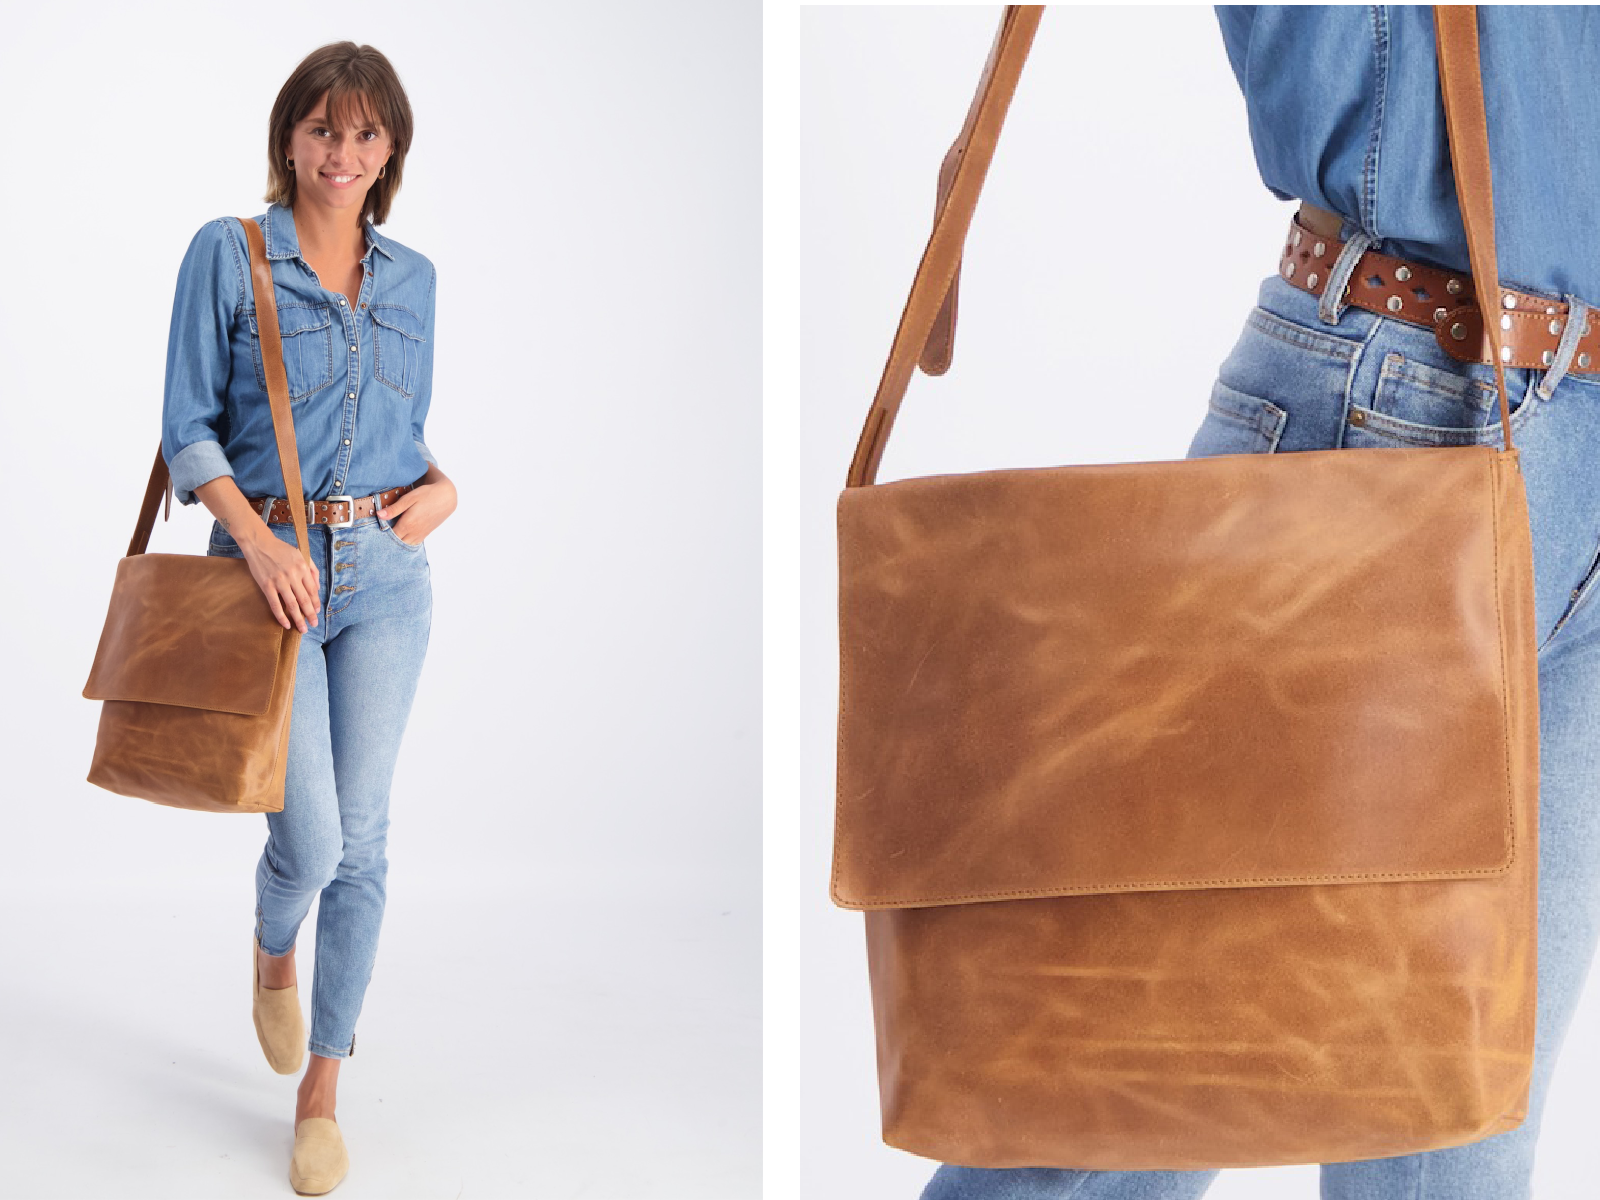 Small Crossbody Purses for Women Multi Pocket Travel Bag Over The Shoulder  with Extra Long Strap - Black - Walmart.com